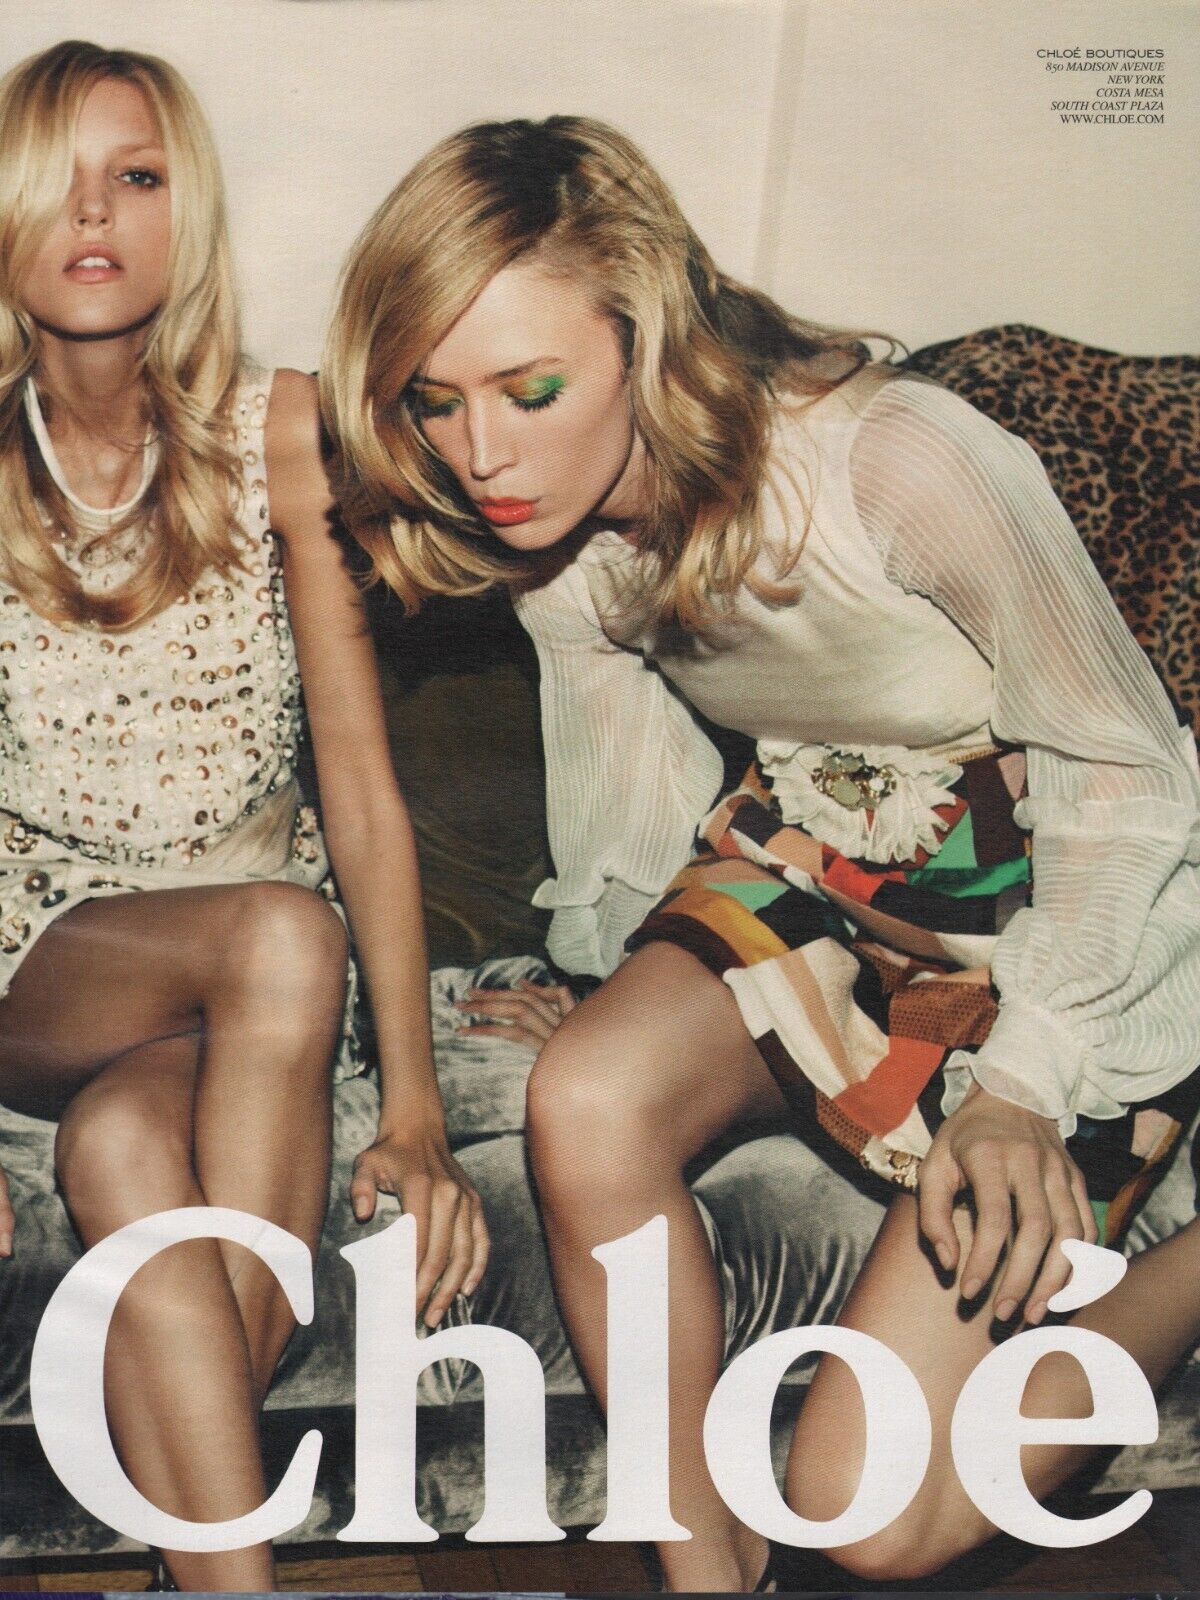 2007 Original CHLOE Women's Clothing Fashion Accessories Blonde Print Ad